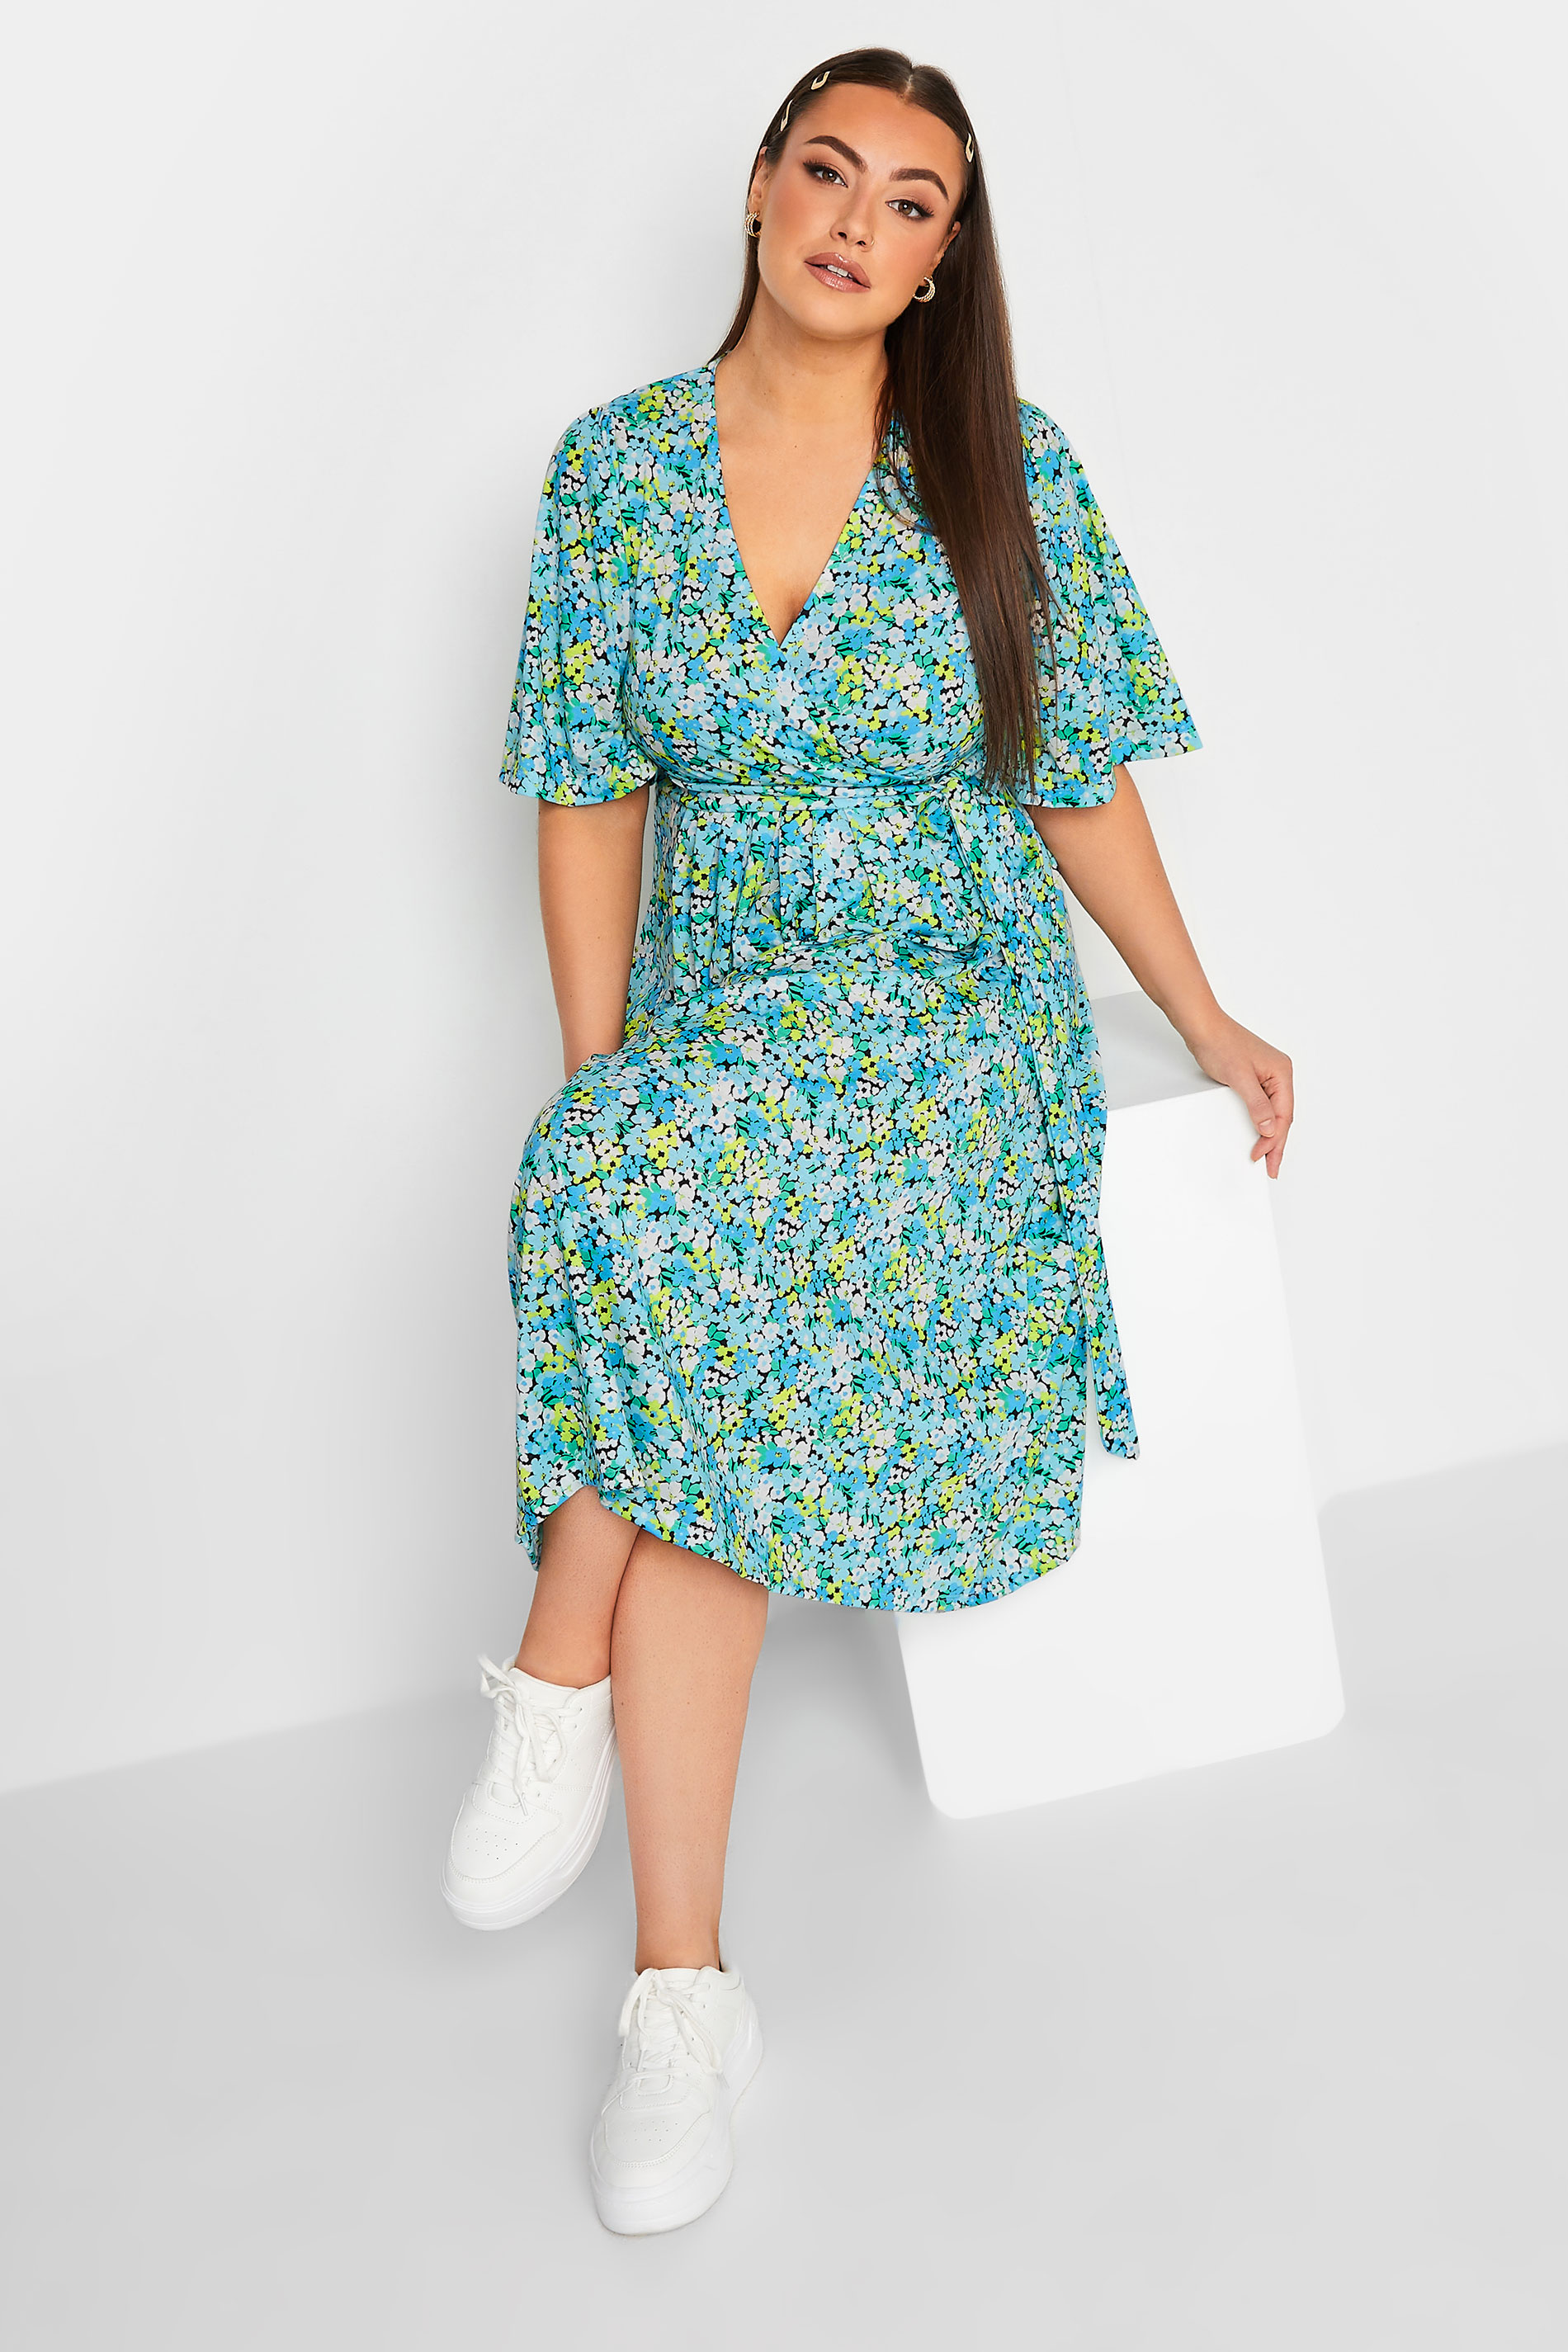 YOURS Plus Size Blue Floral Print Wrap Midi Dress | Yours Clothing 2